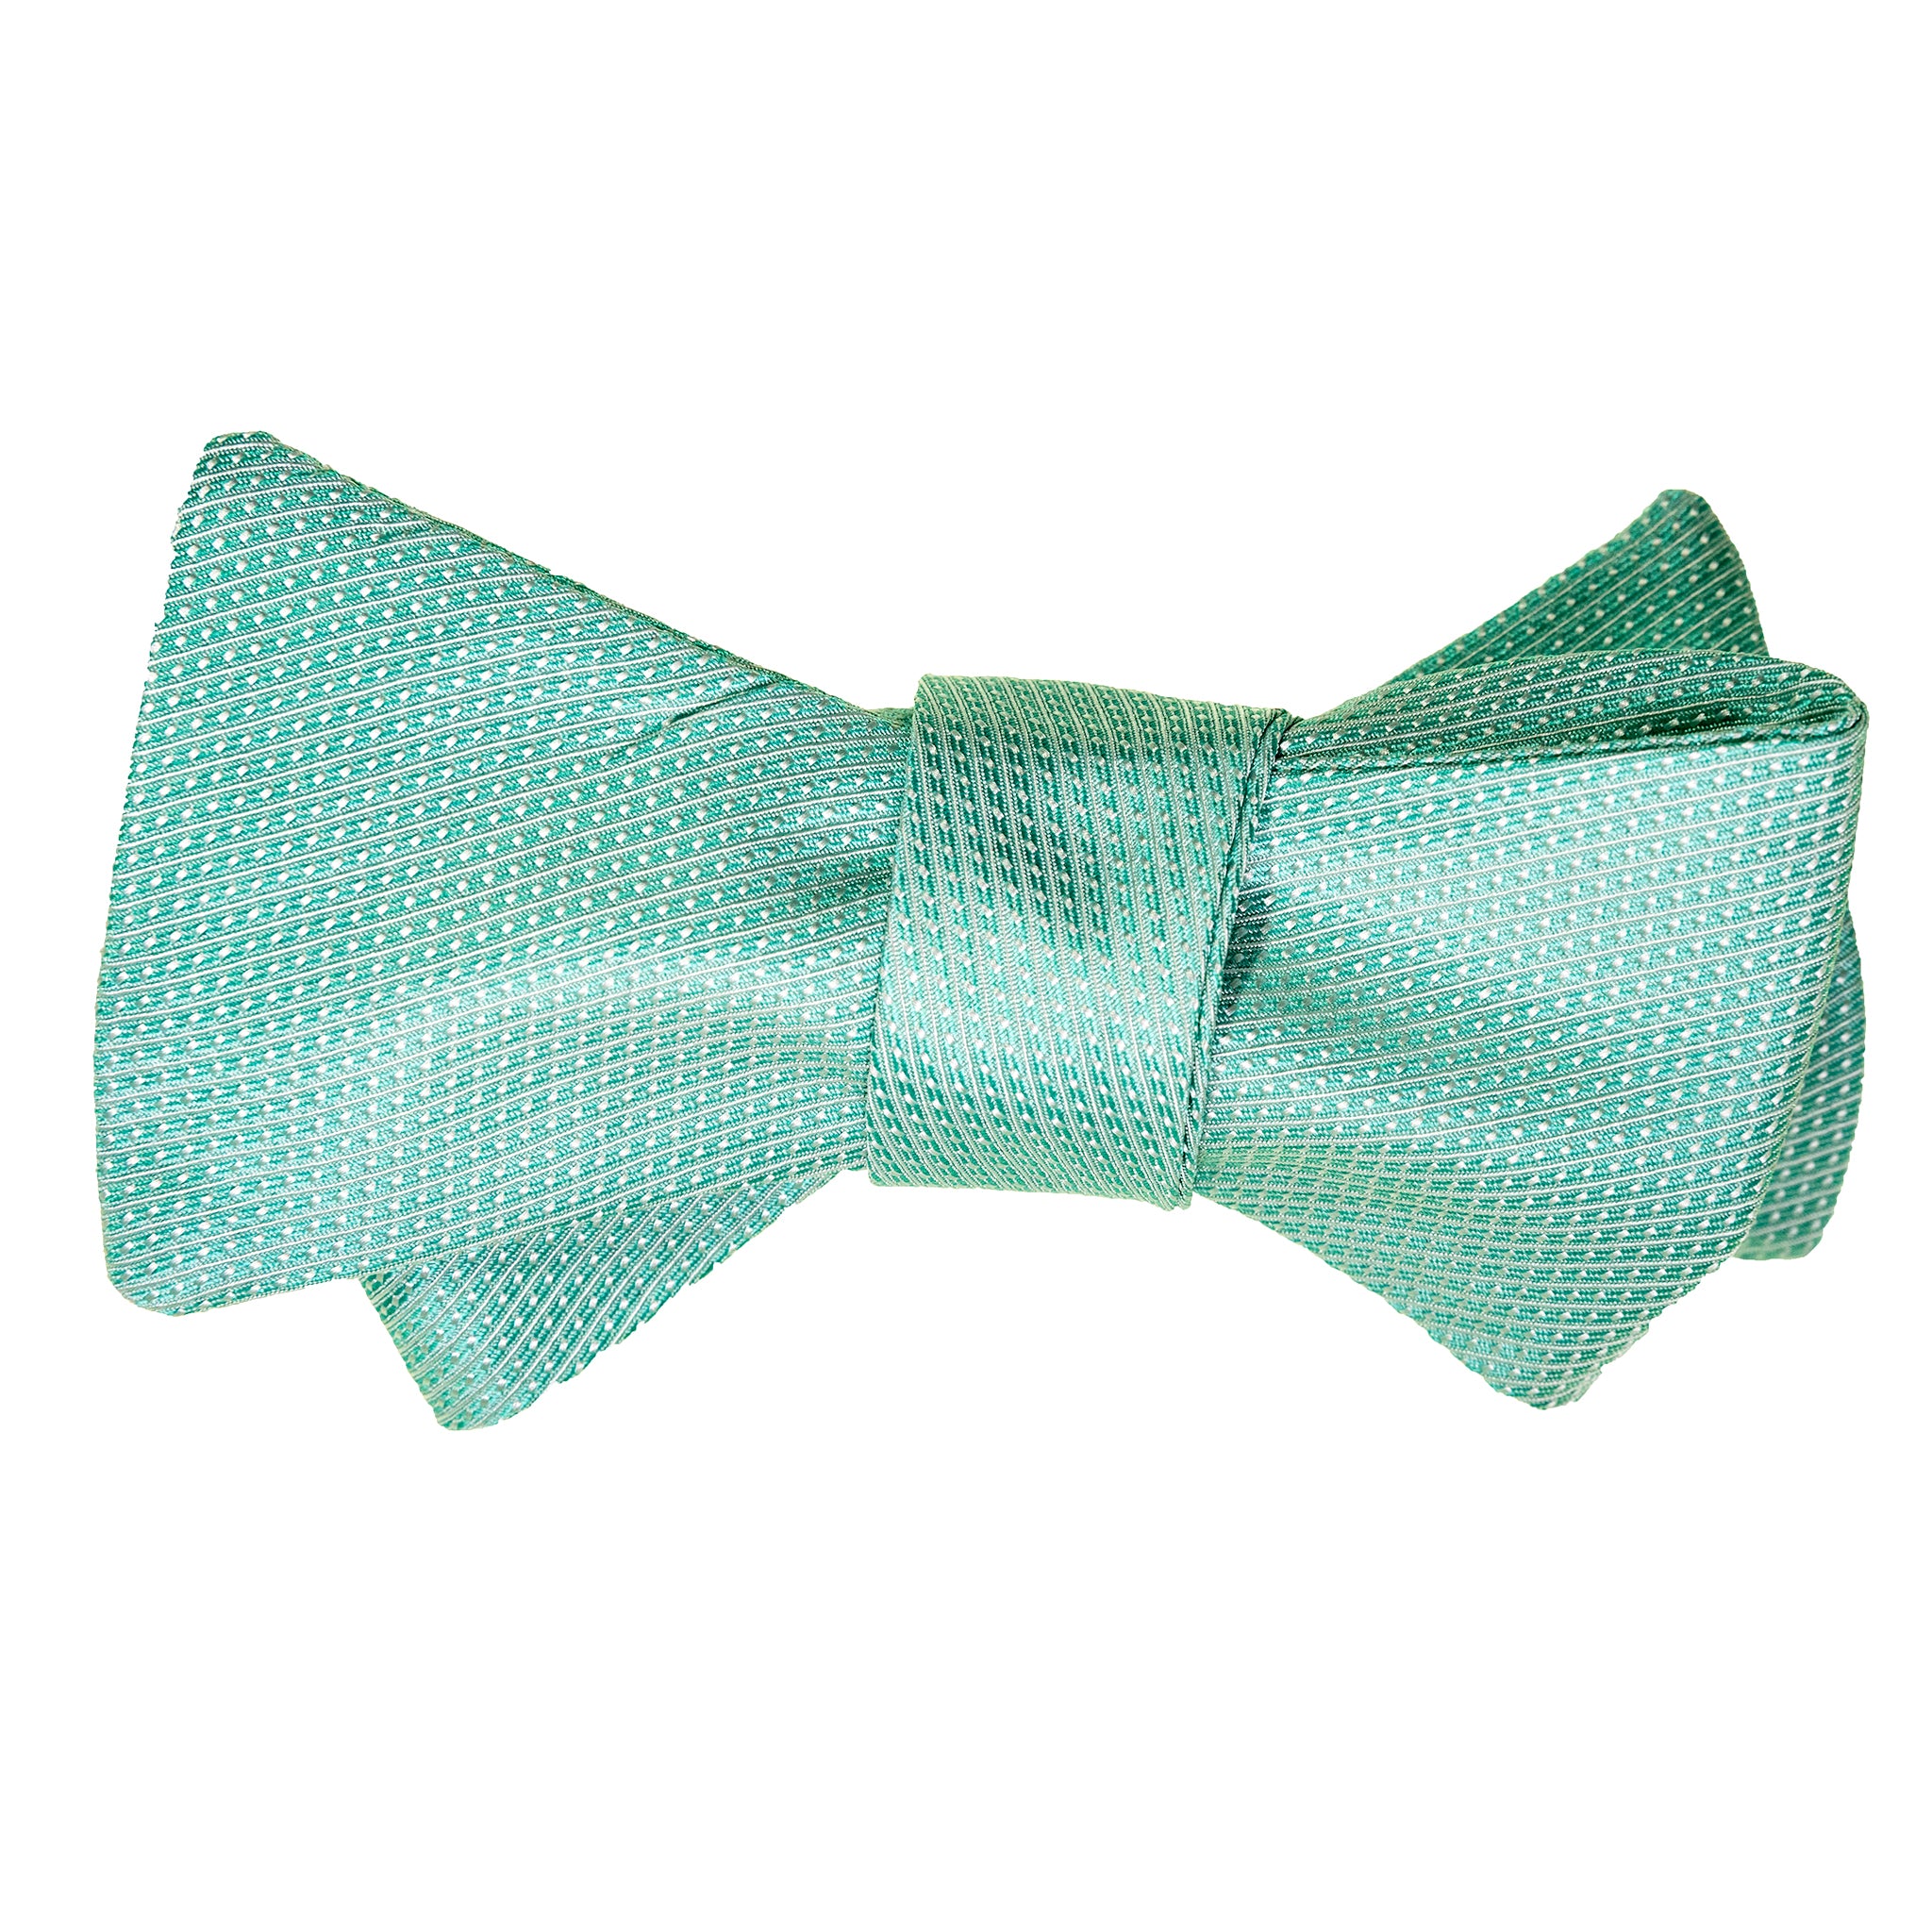 Seafoam Iridescent Silk Bow Tie